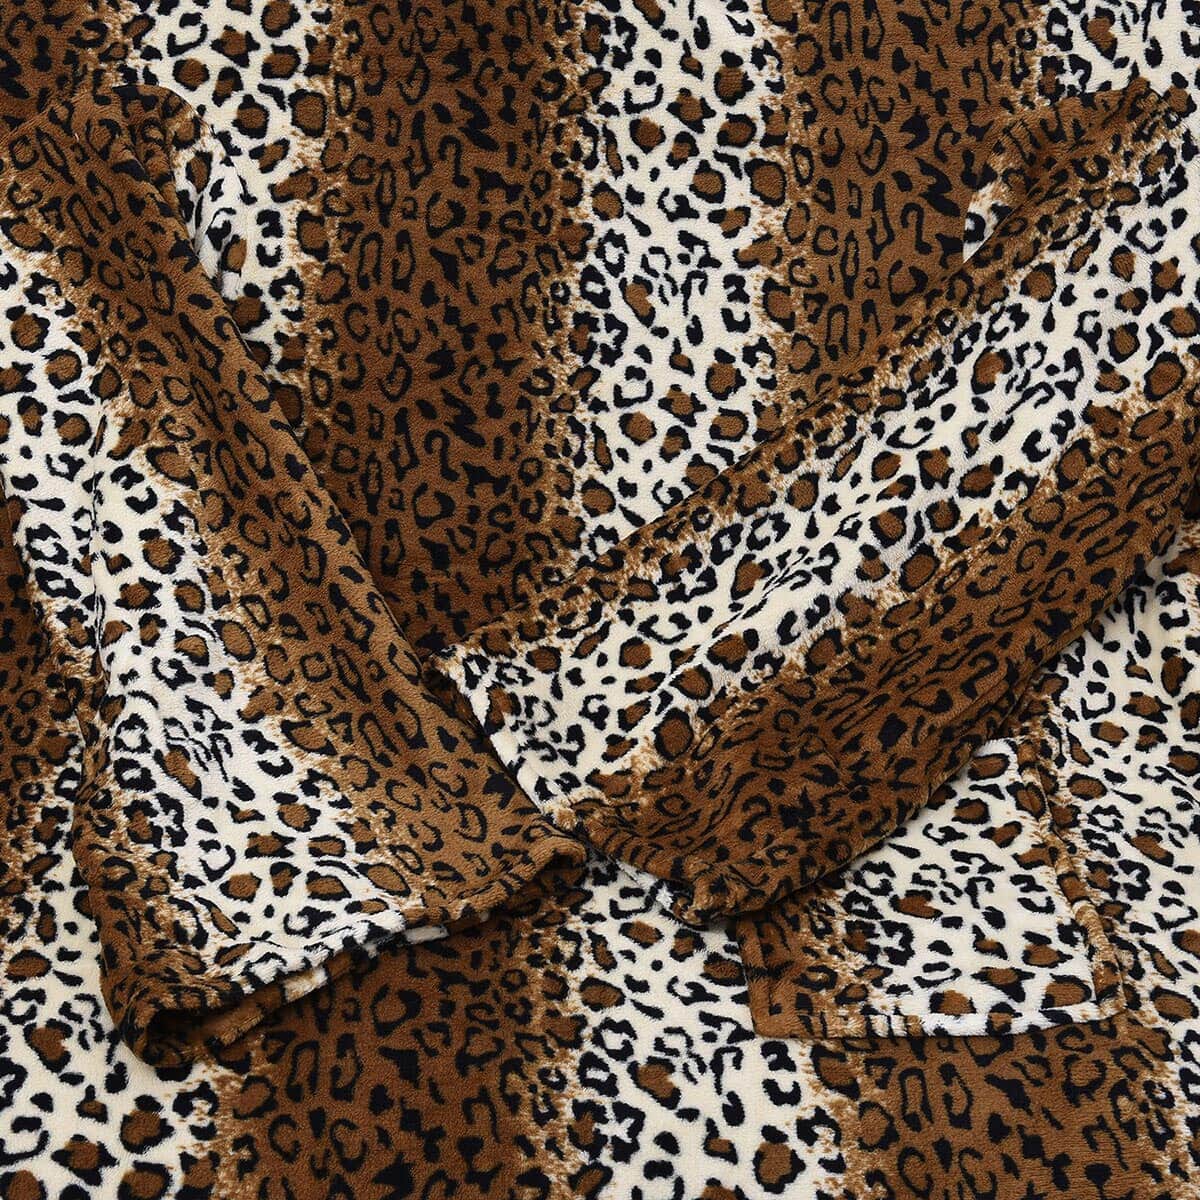 Homesmart Leopard Warm & Cozy Coral Fleece Wearable Sleeve Blanket with Front Pocket image number 2